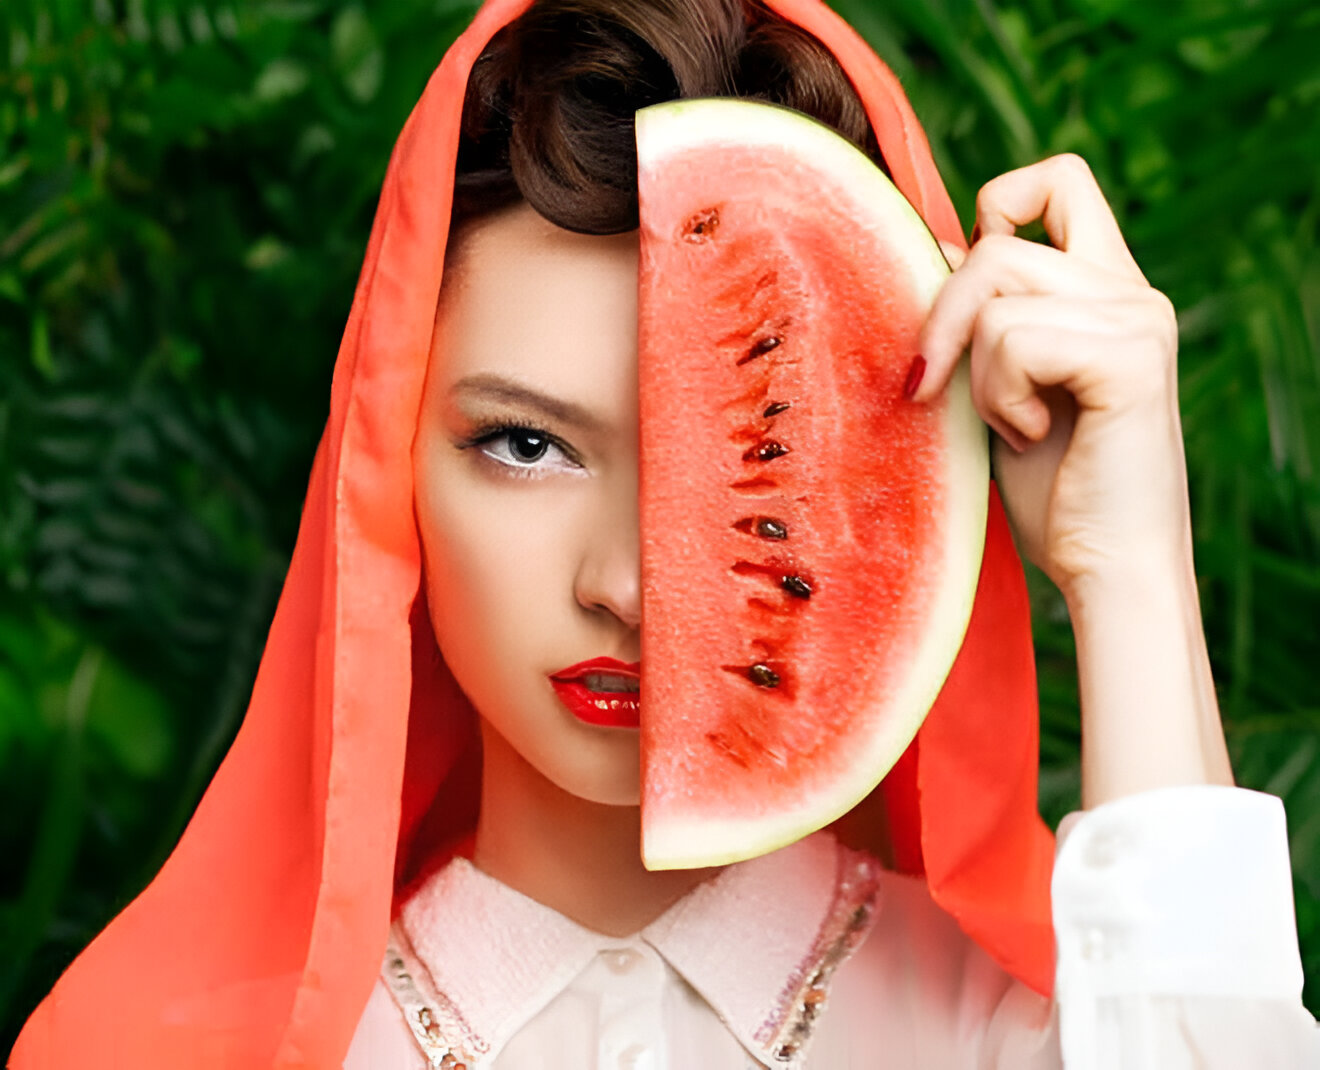 Watermelon Mask